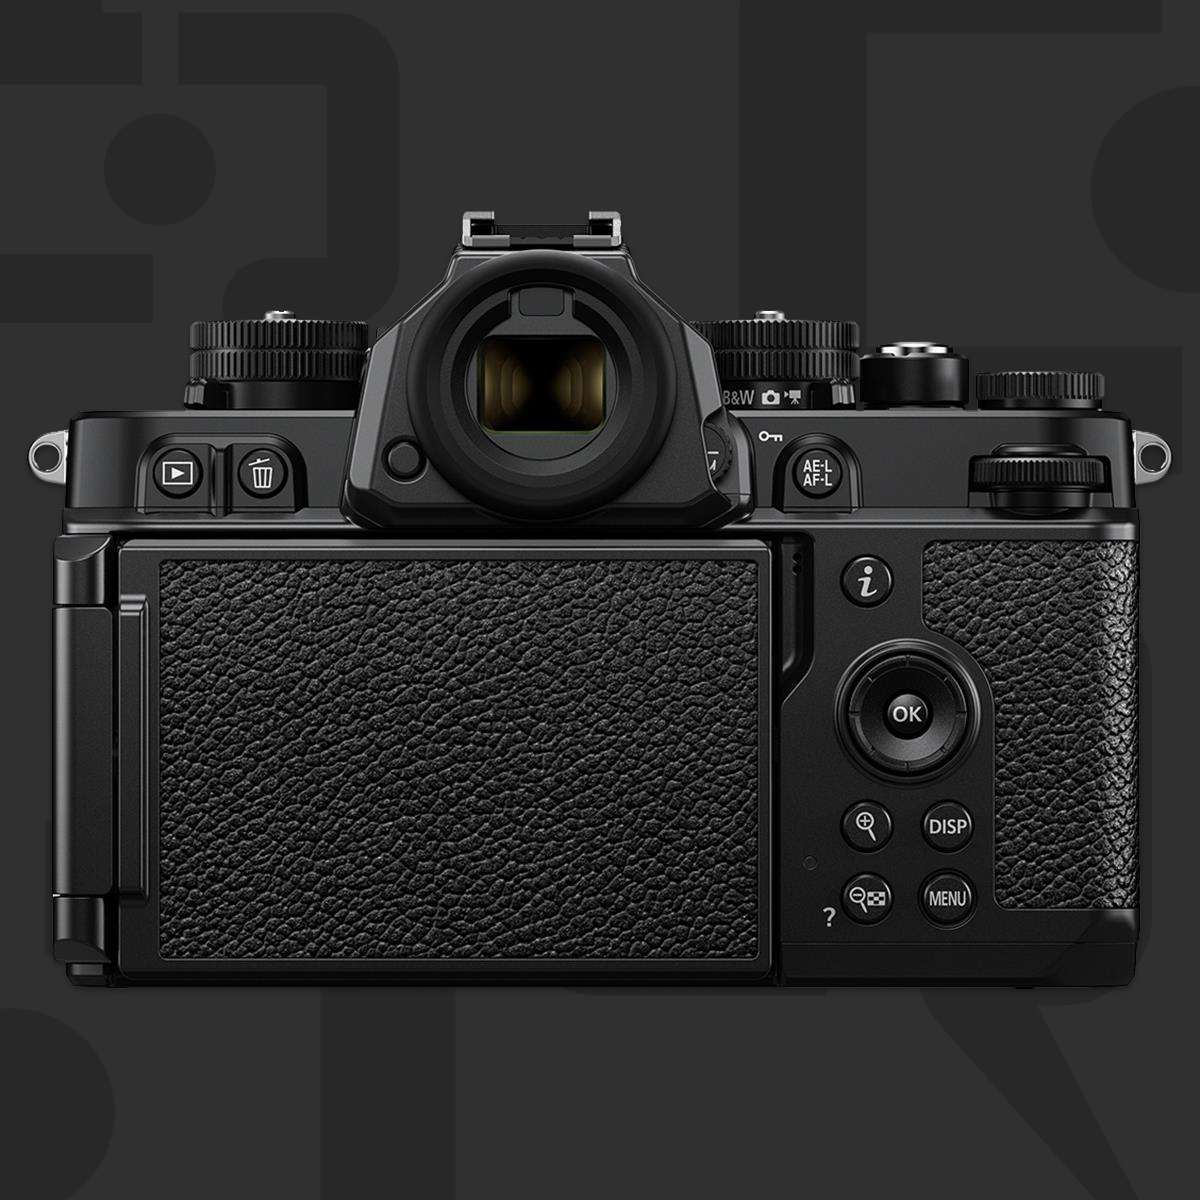 nikonzf 03 - Nikon officially announces the Z f retro inspired camera body